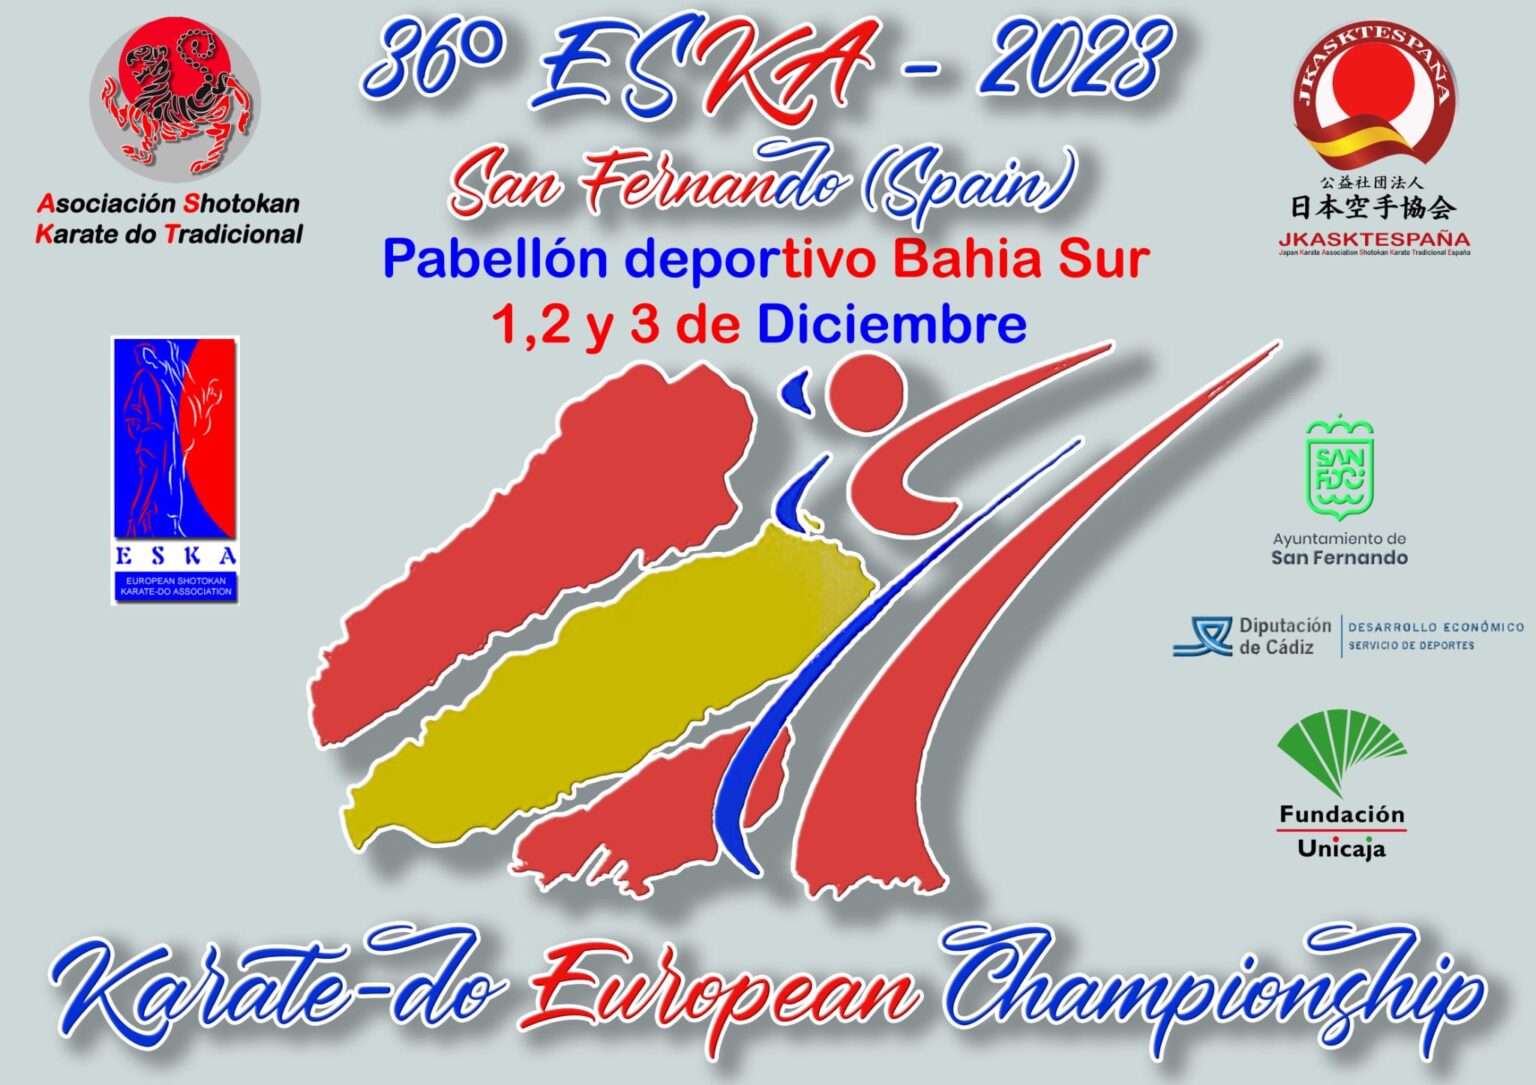 36th Europian Traditional Karate Championship